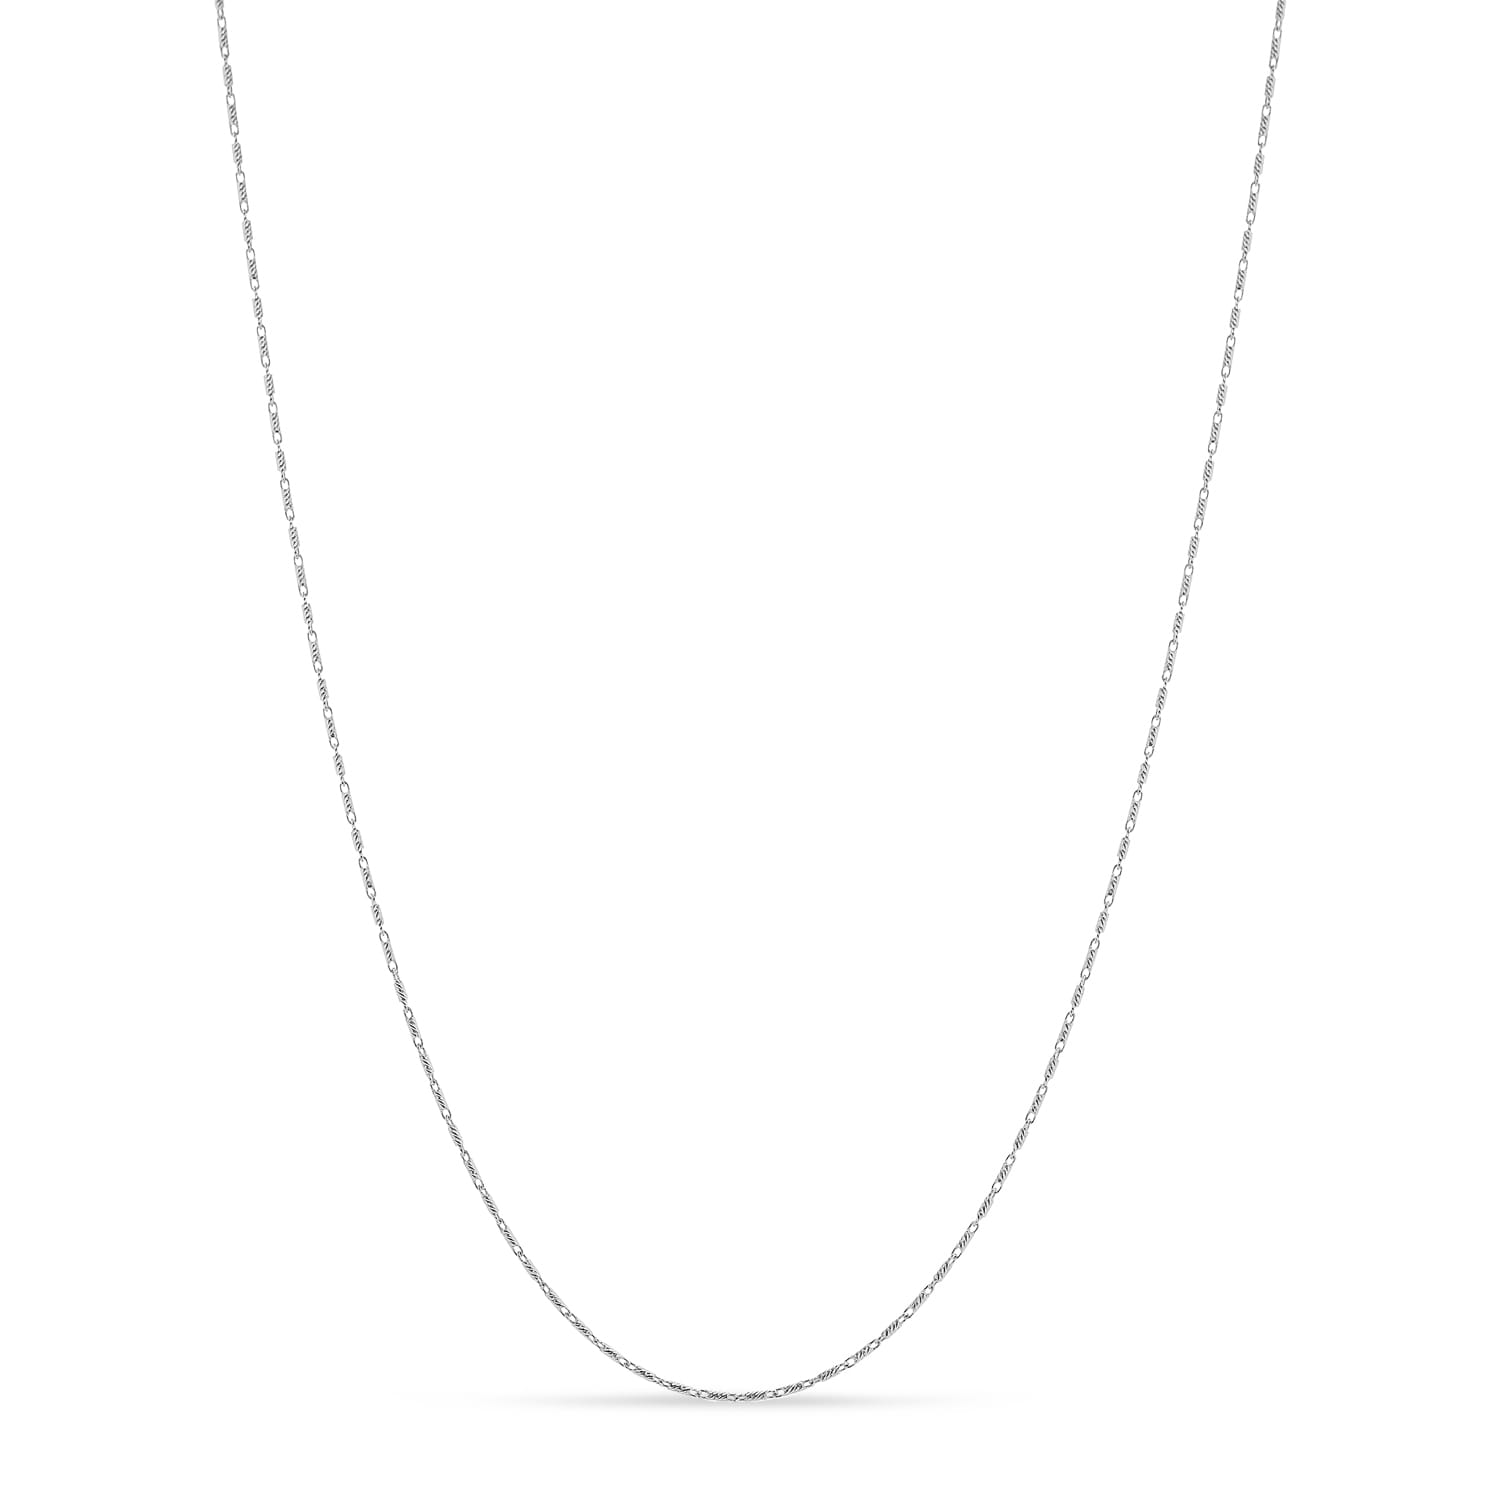 Lumacina Chain Necklace 14k White Gold